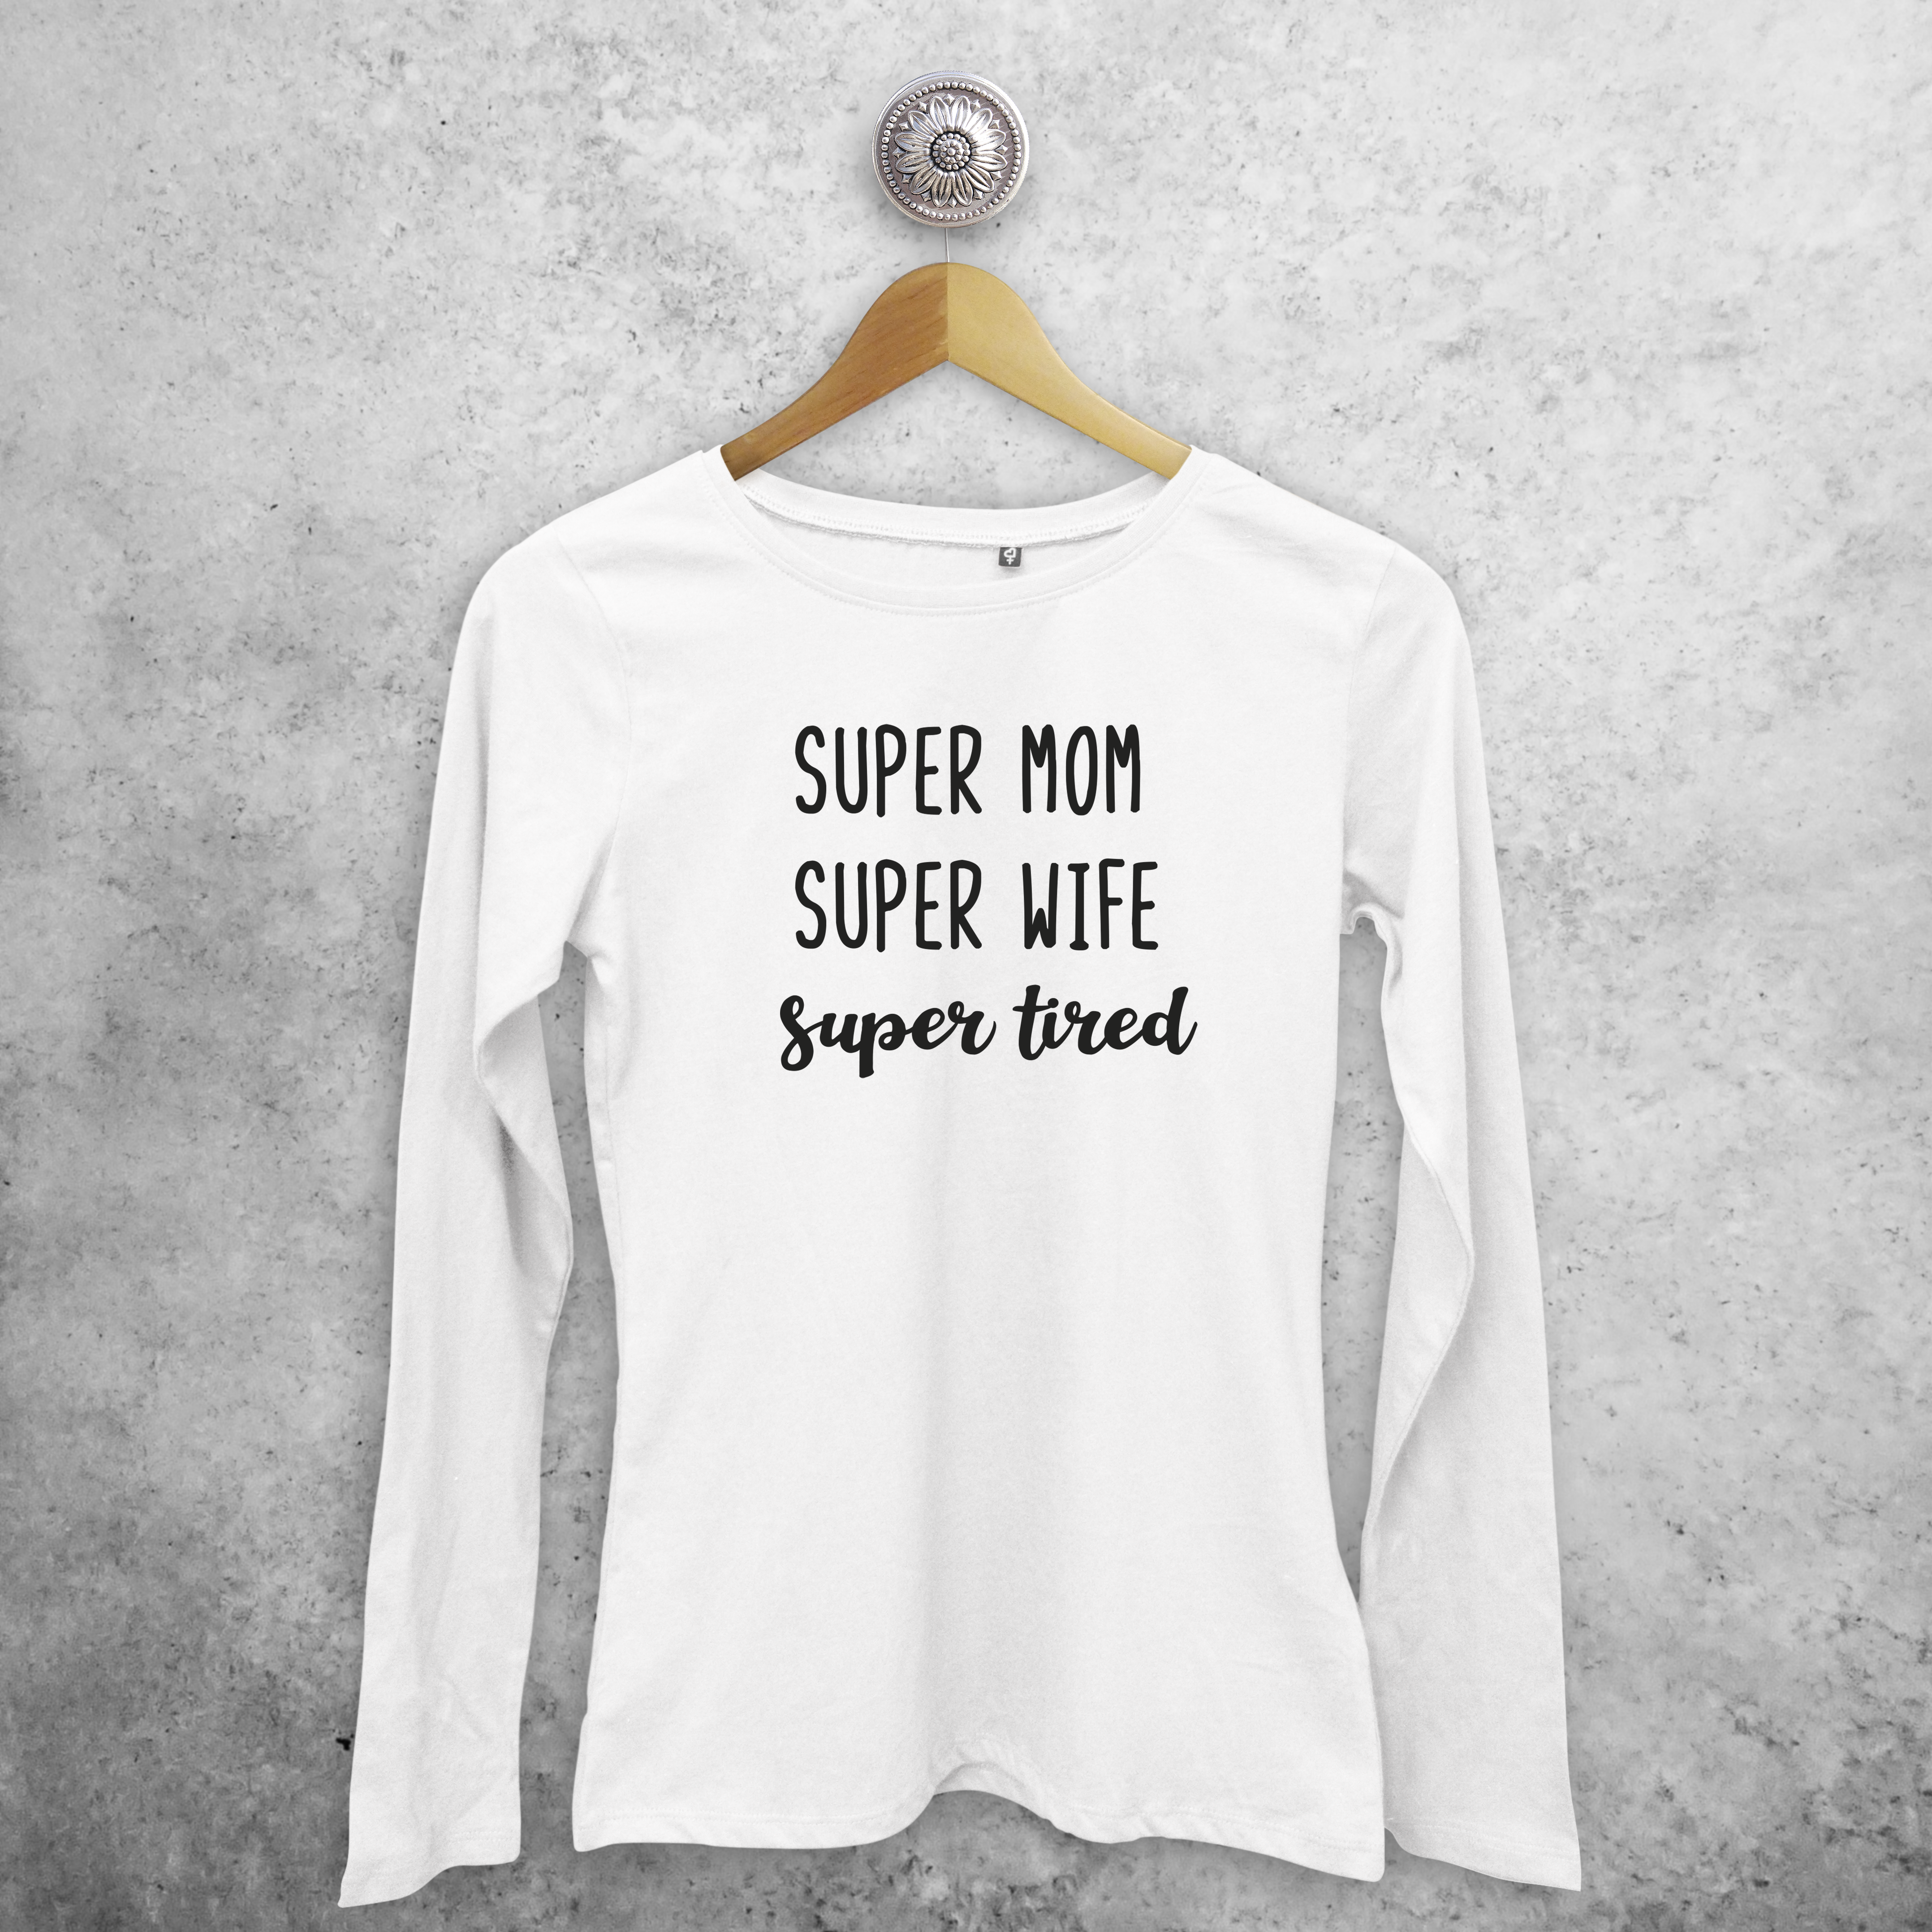 'Super mom, Super wife, Super tired' adult longsleeve shirt